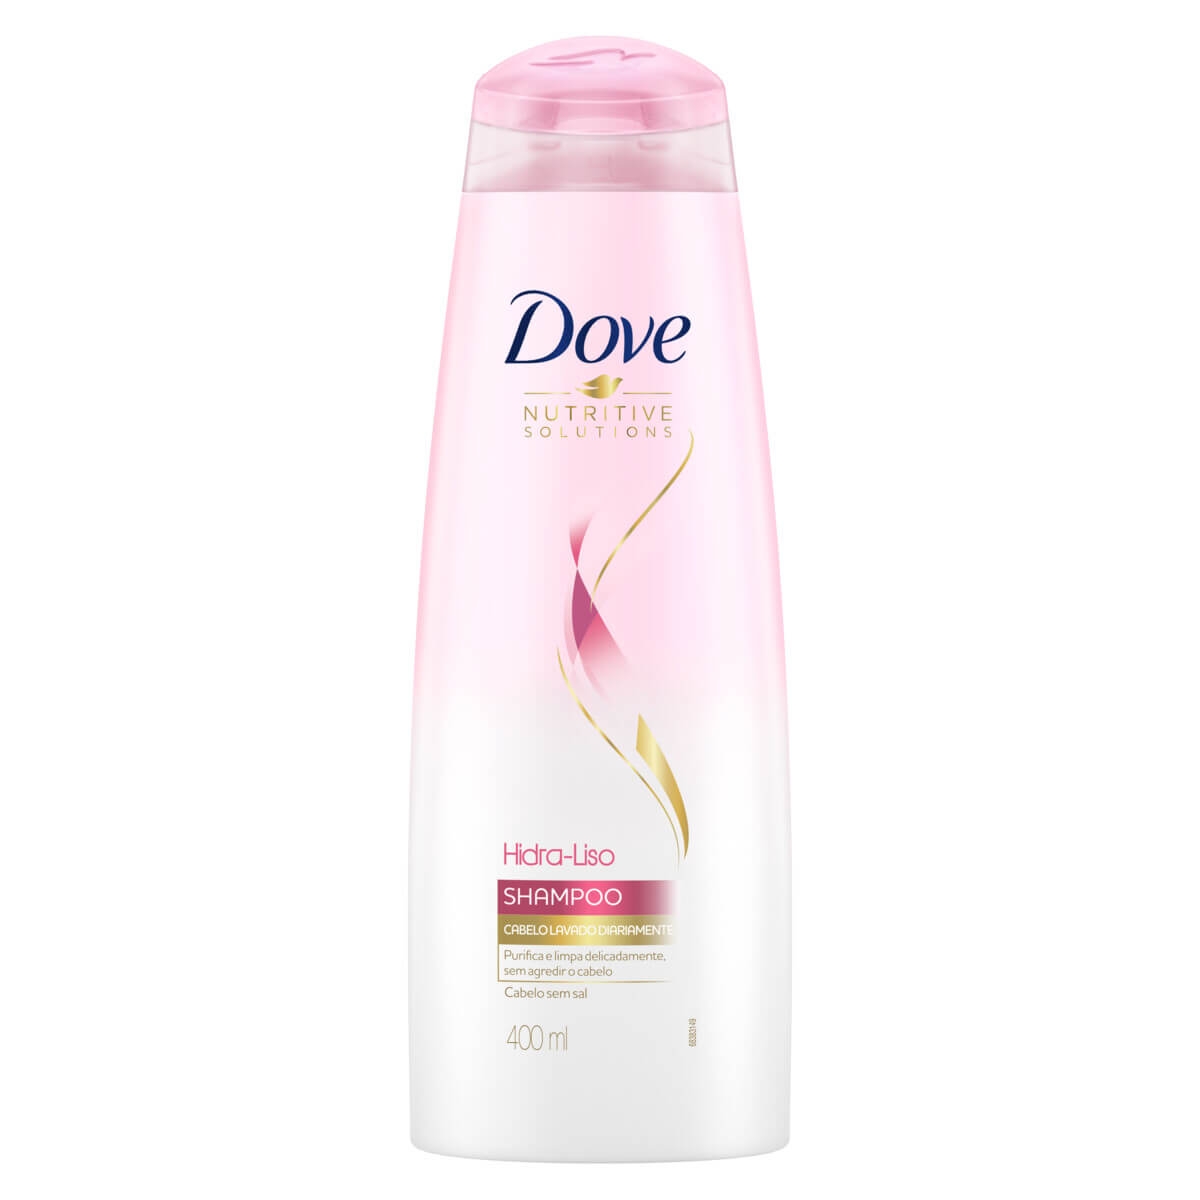 Shampoo Dove Nutritive Solutions Hidra-Liso com 400ml 400ml